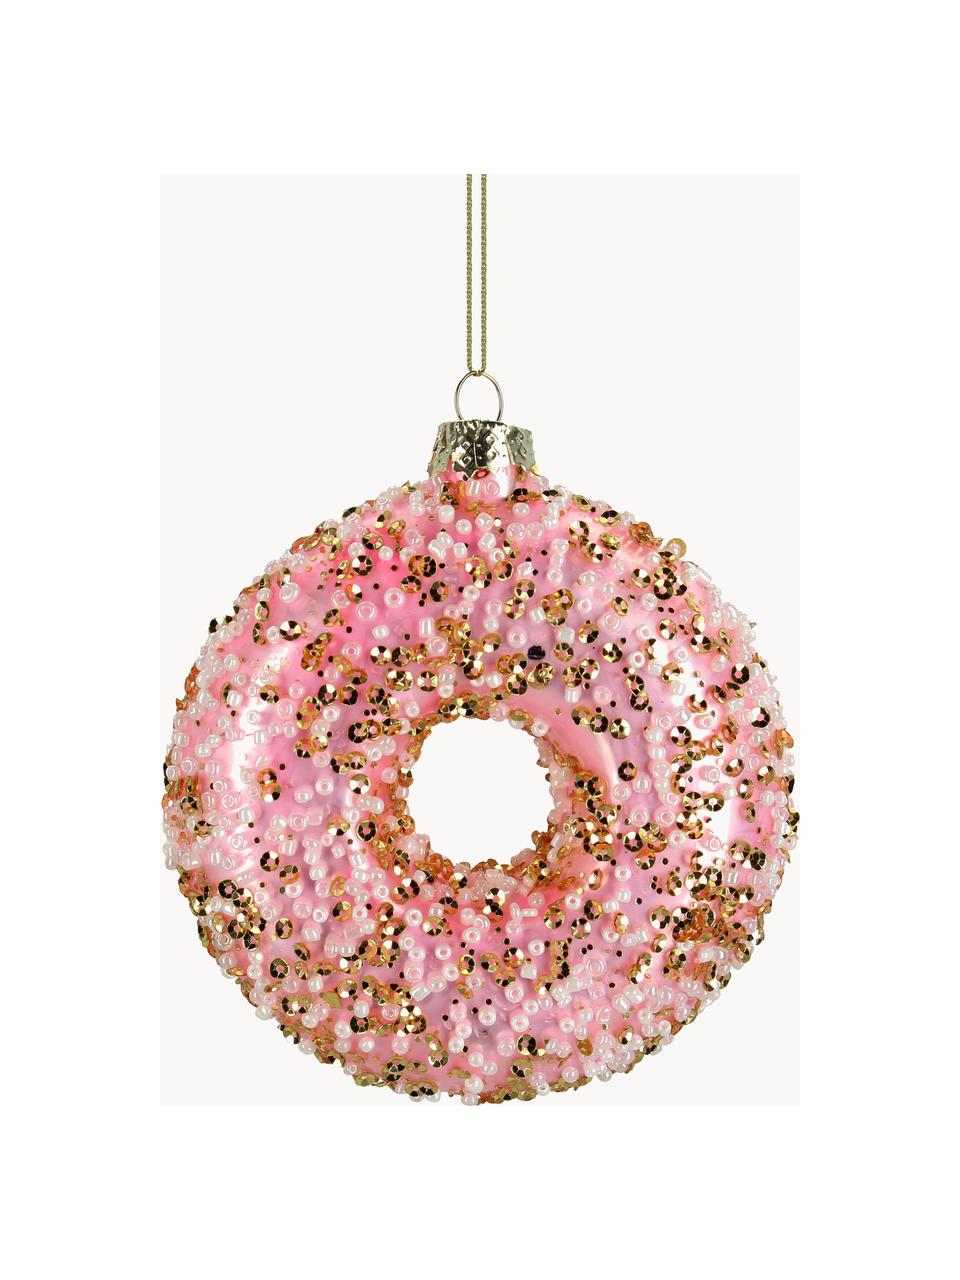 Baumanhänger Glaze in Donutform, Glas, Rosa, Goldfarben, Ø 9 cm